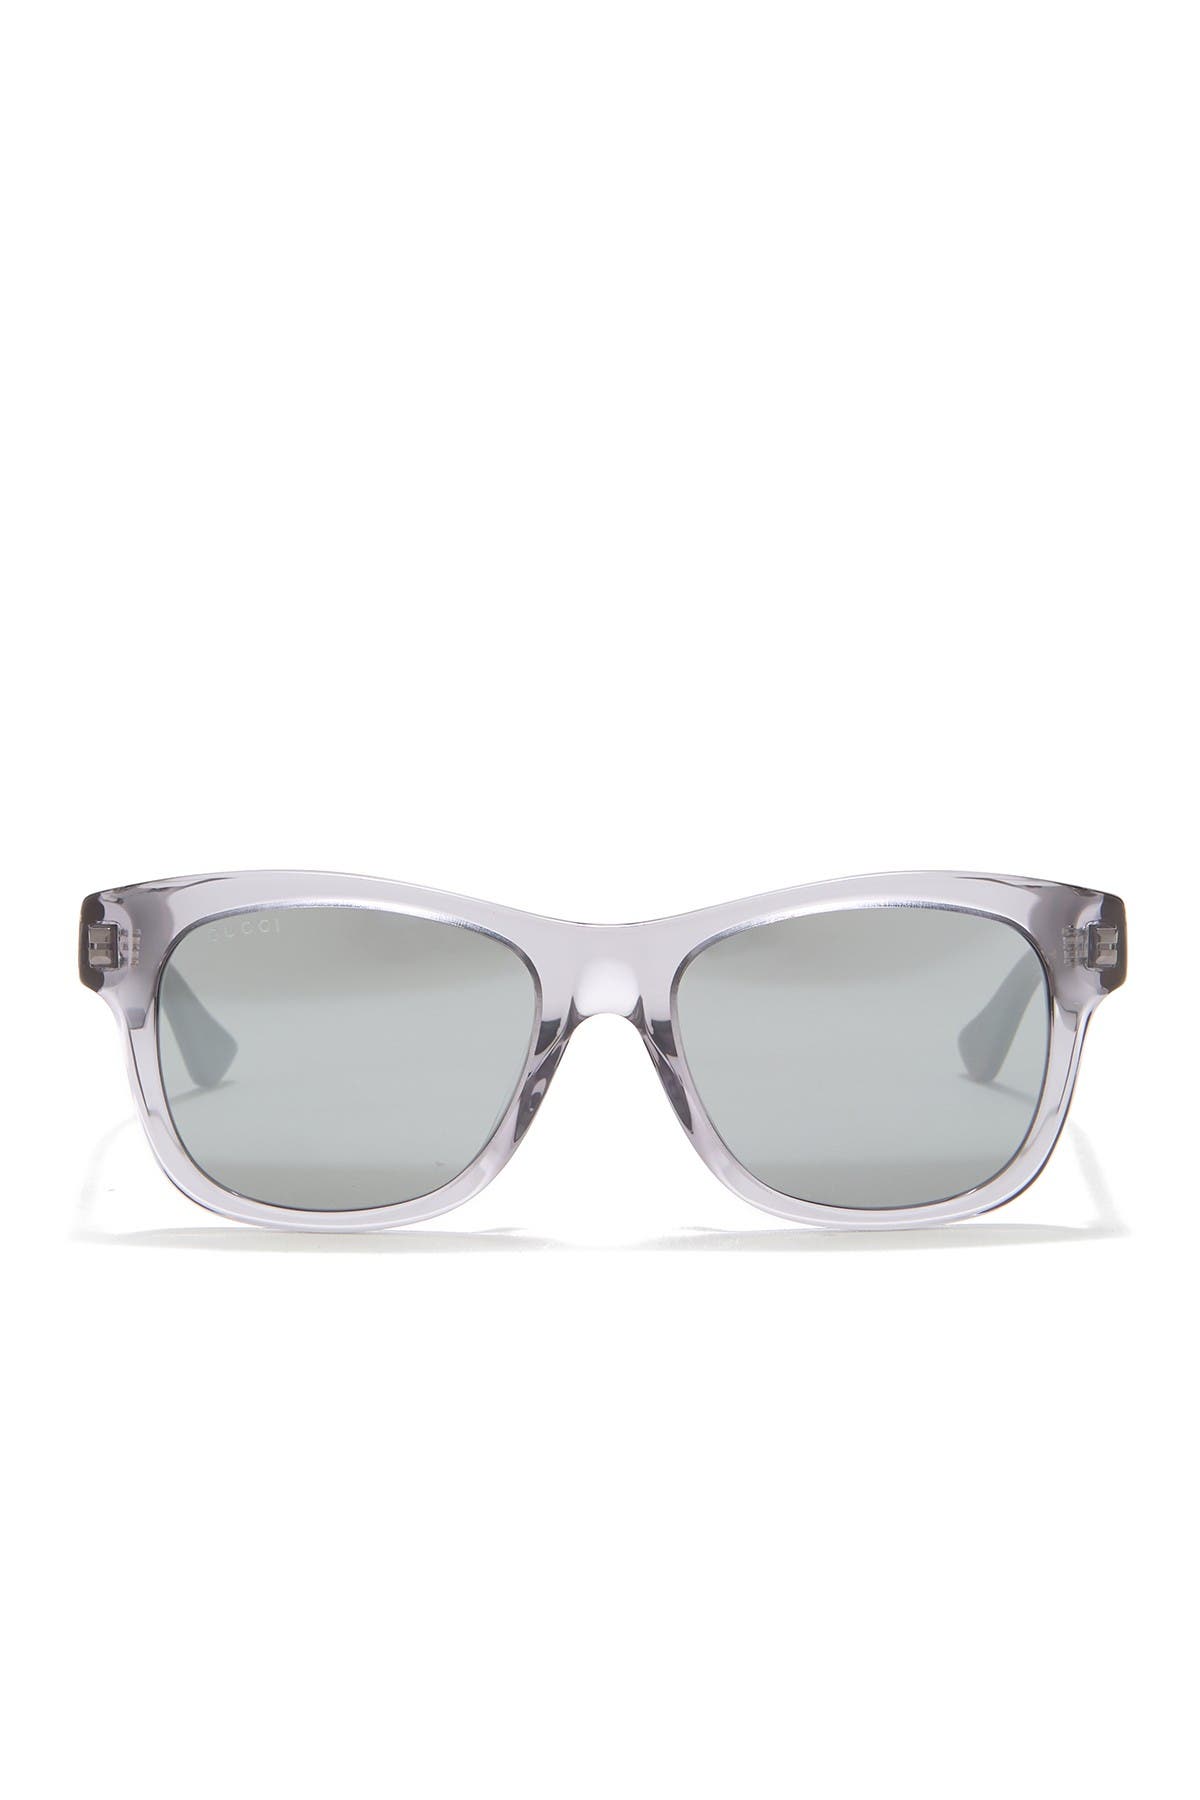 gucci 53mm rectangle sunglasses